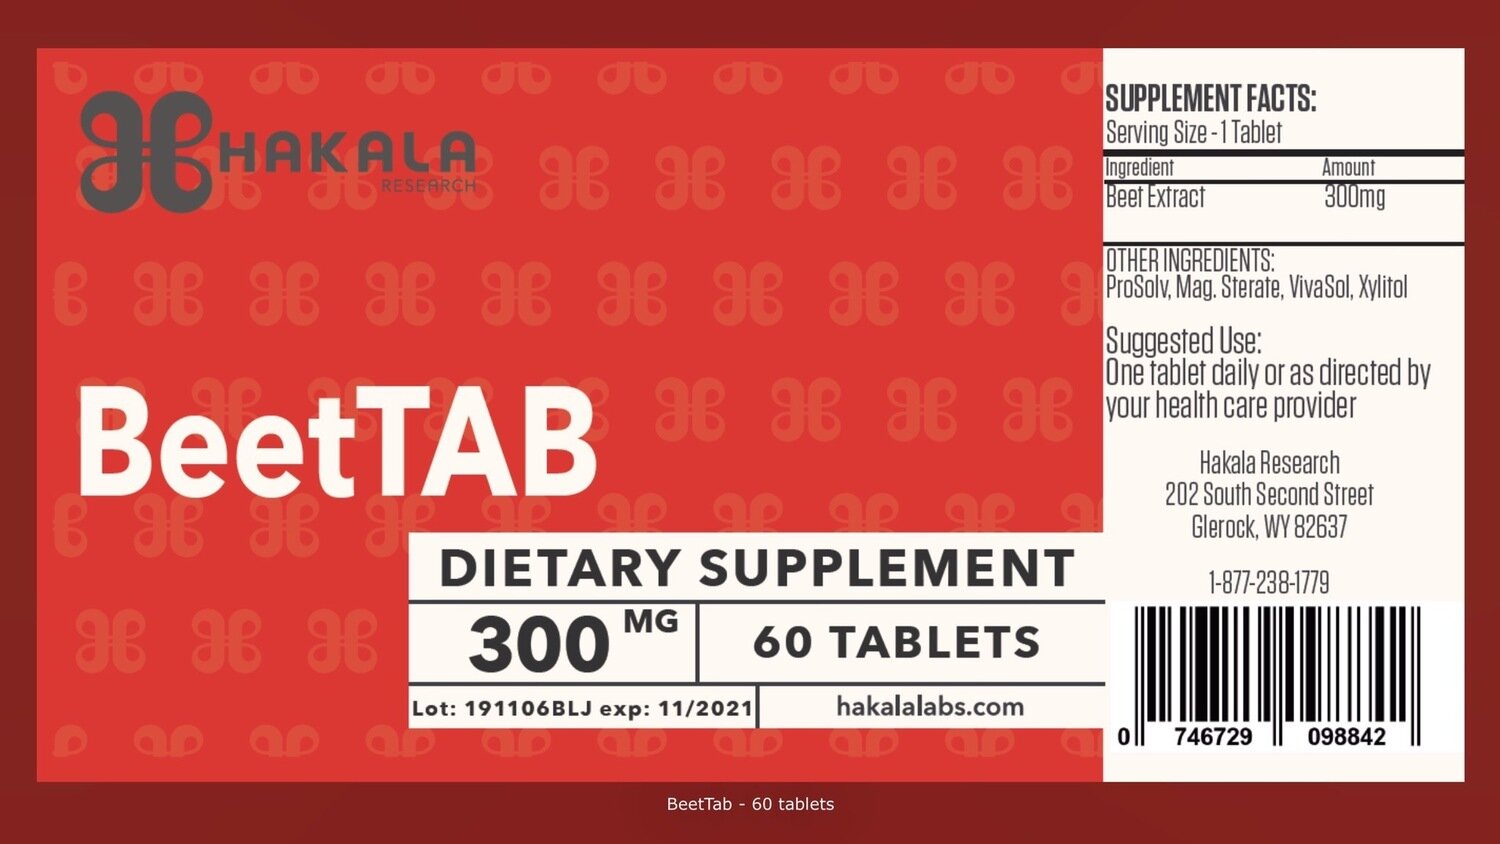 BeetTab - 60 tablets